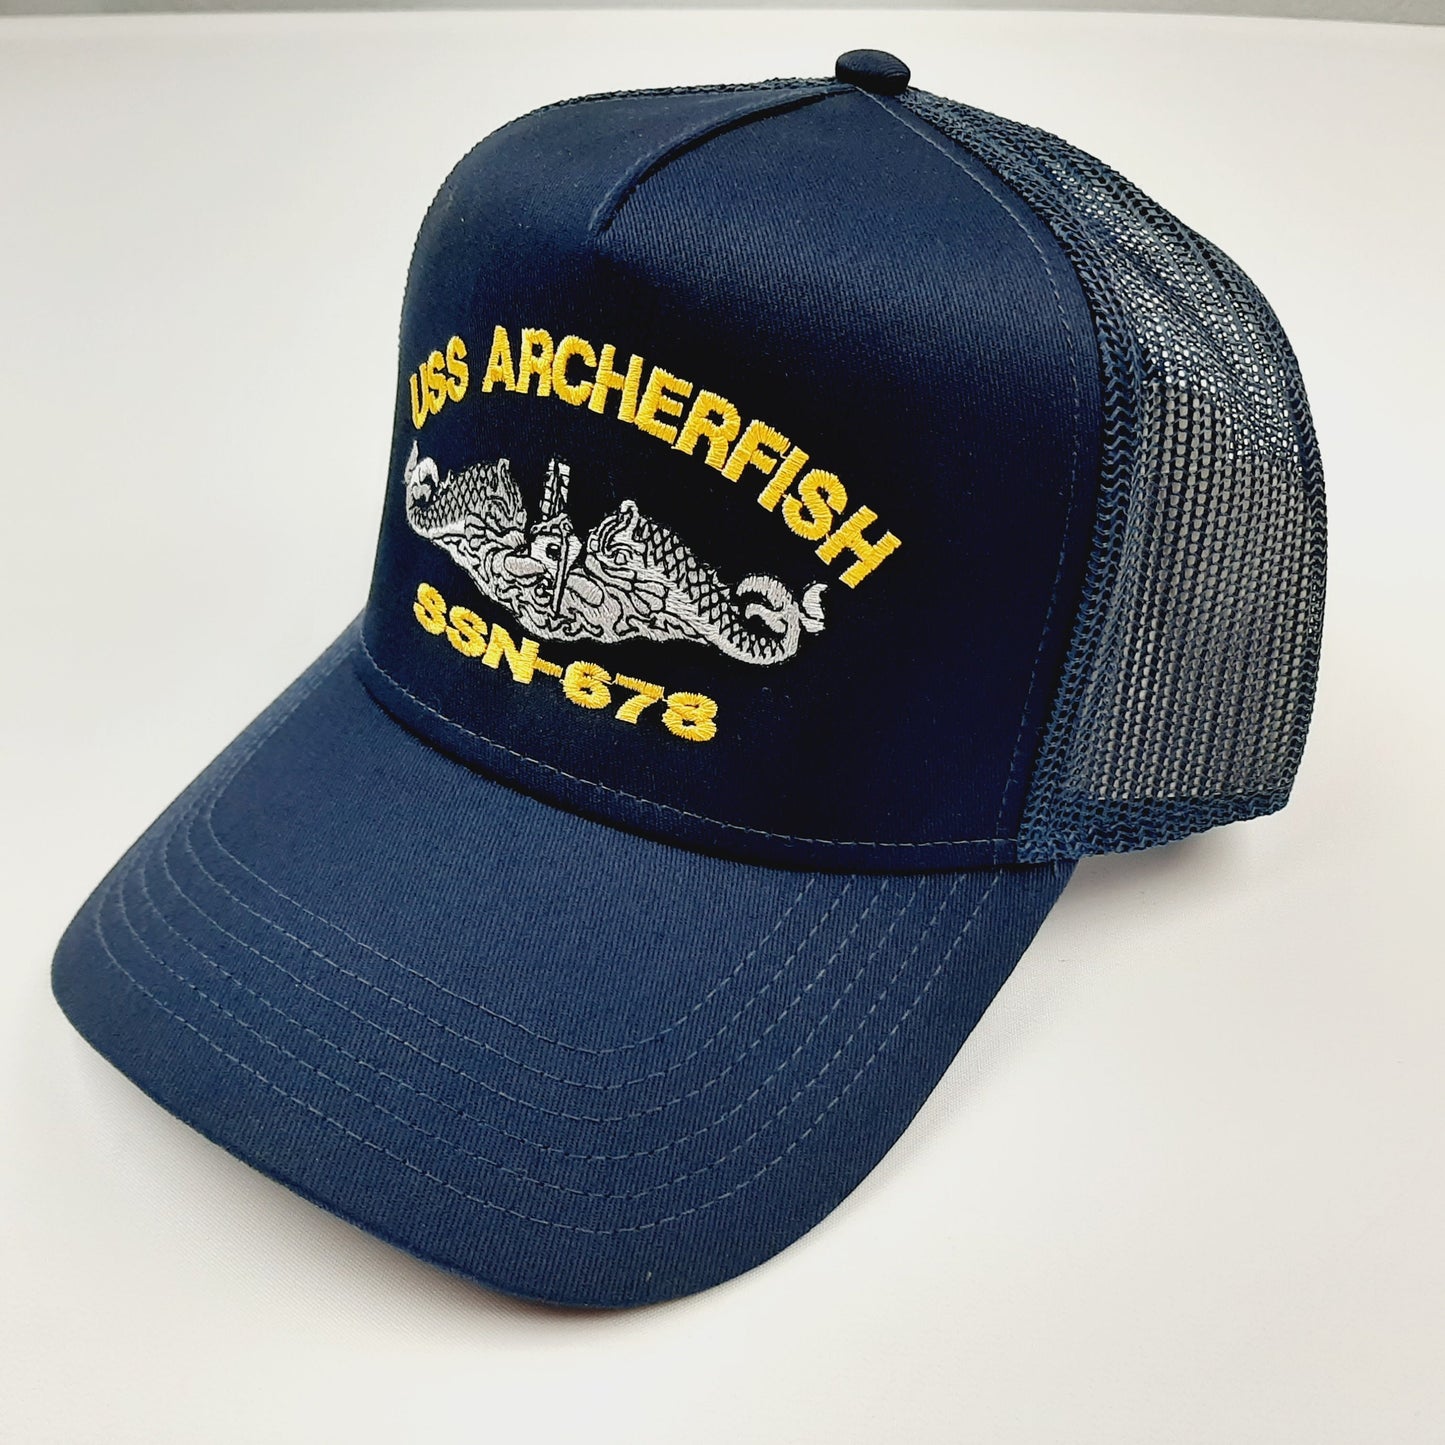 USS Archerfish SSN-678 U.S Navy Ship Boat Hat Cap Mesh Snapback Blue Curved